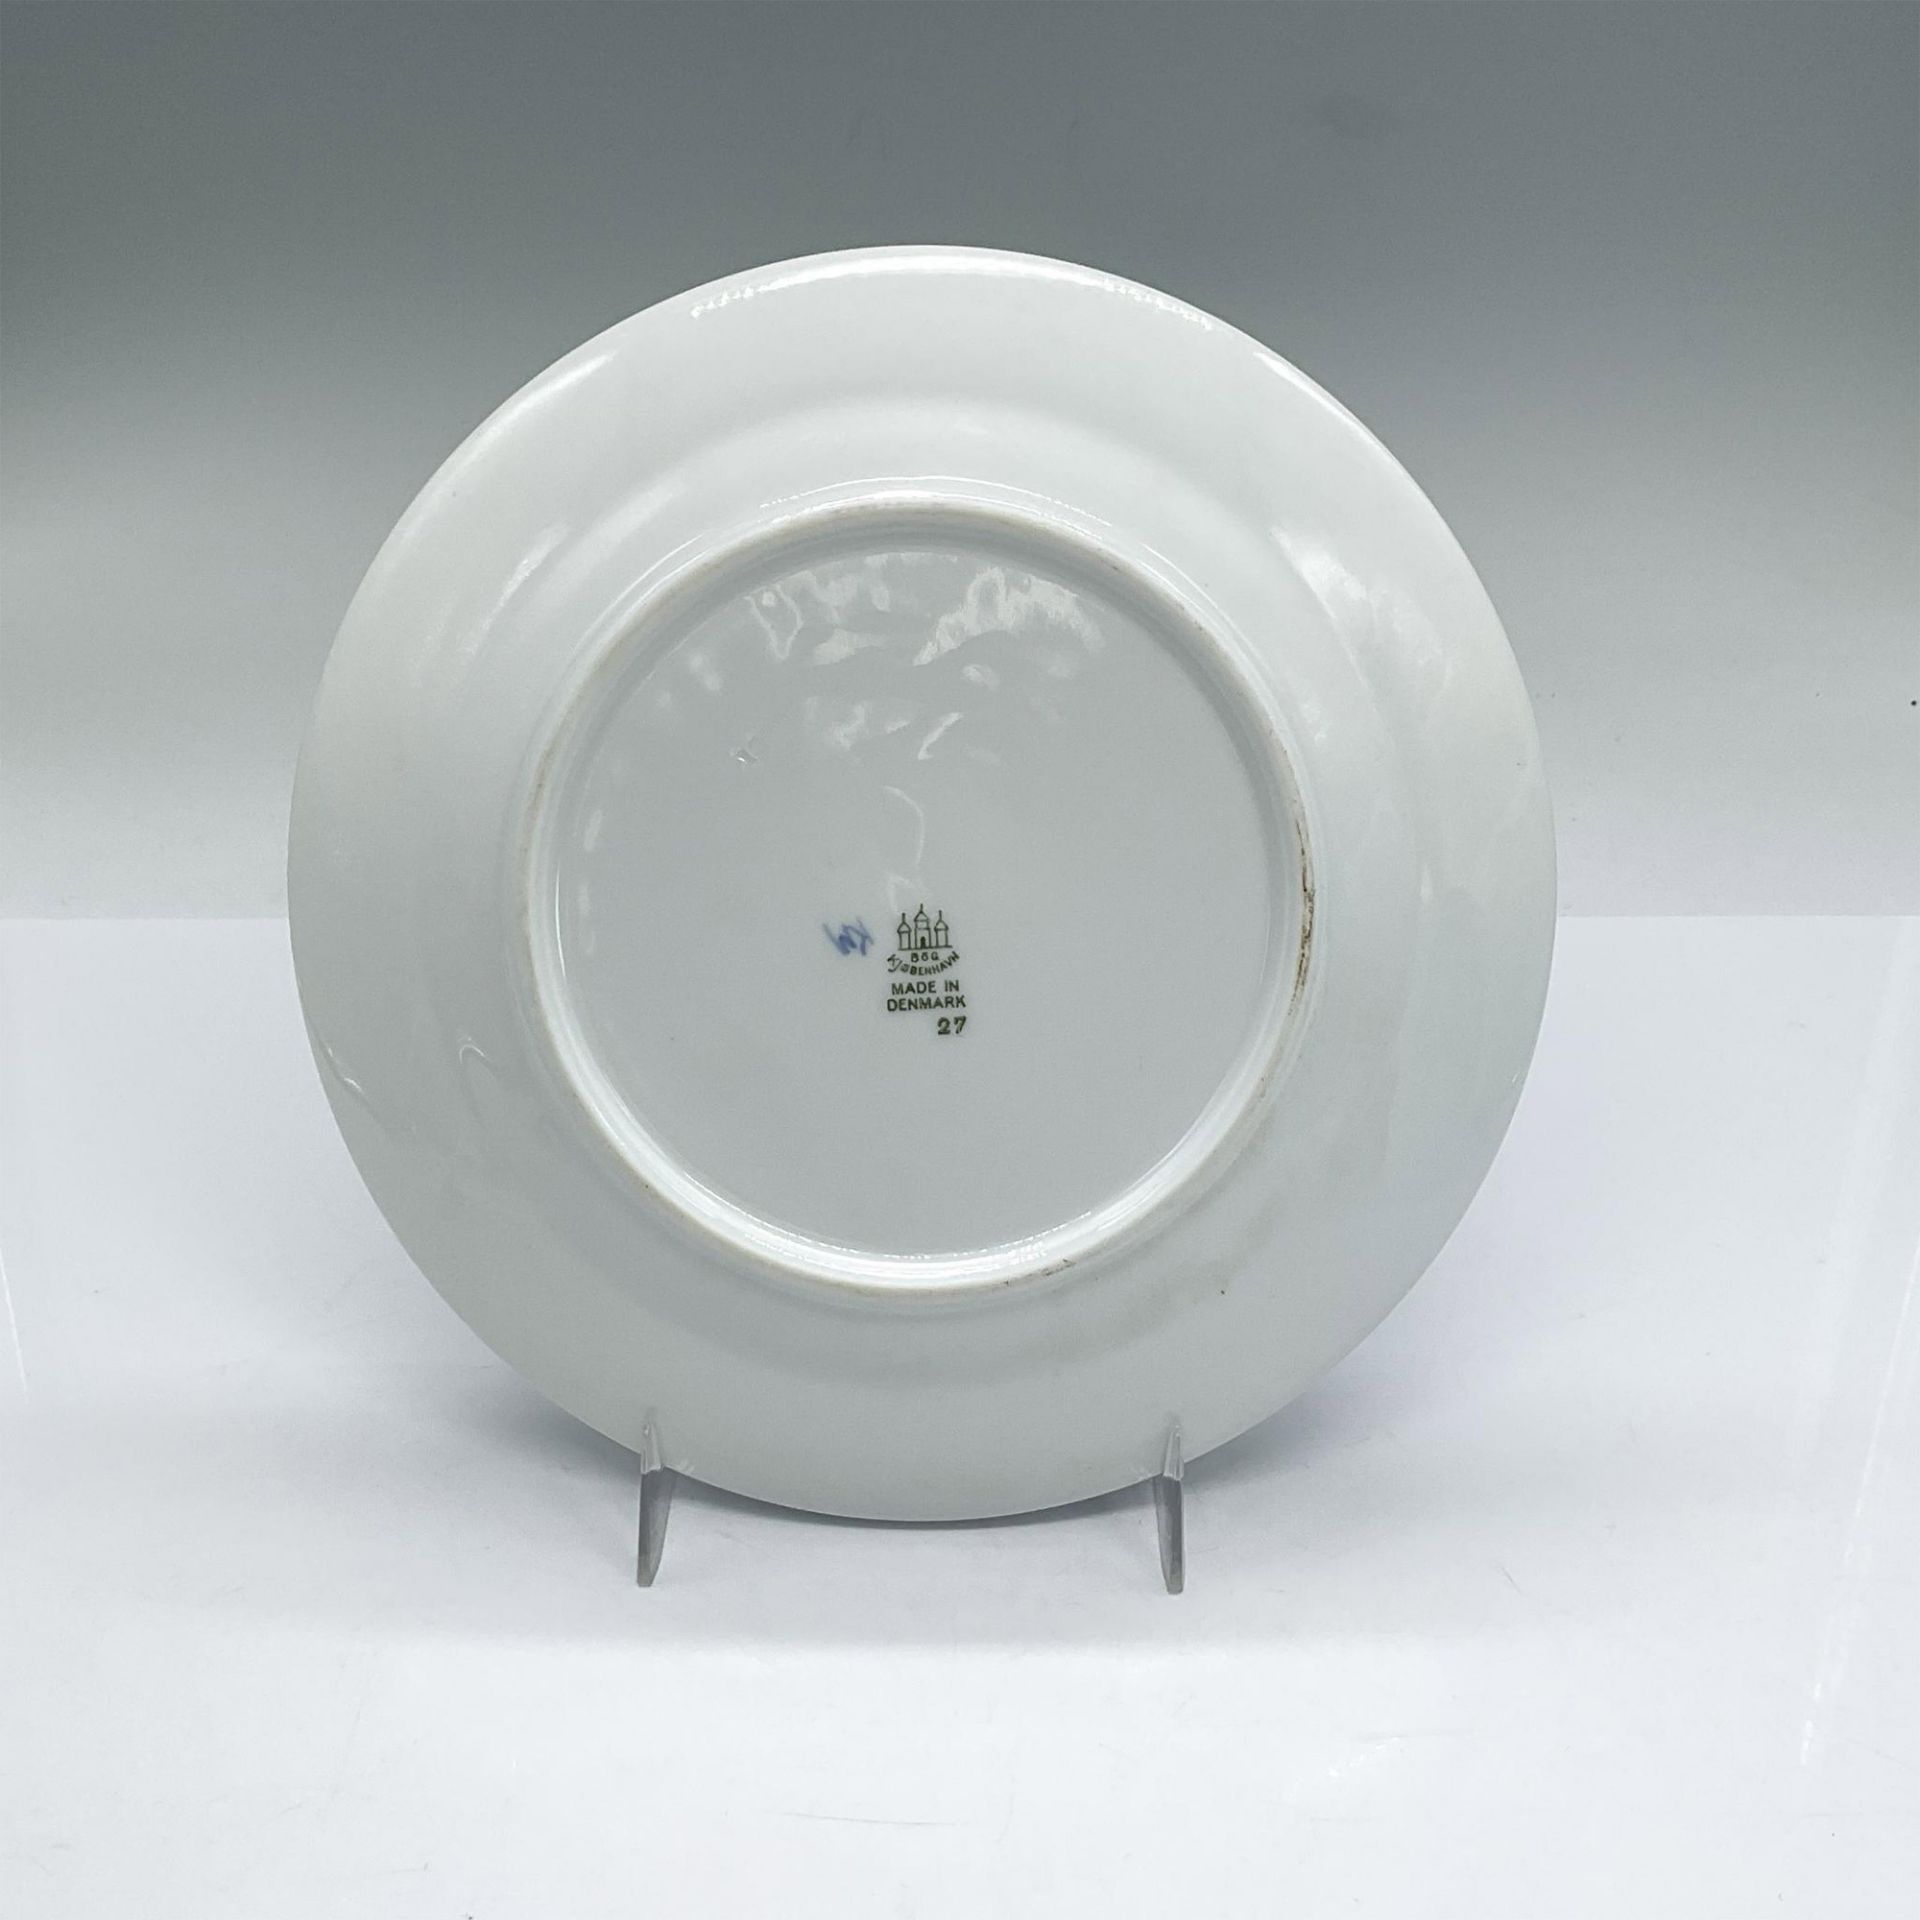 4pc Bing & Grondahl Porcelain Dishes, Christmas Rose - Image 5 of 7